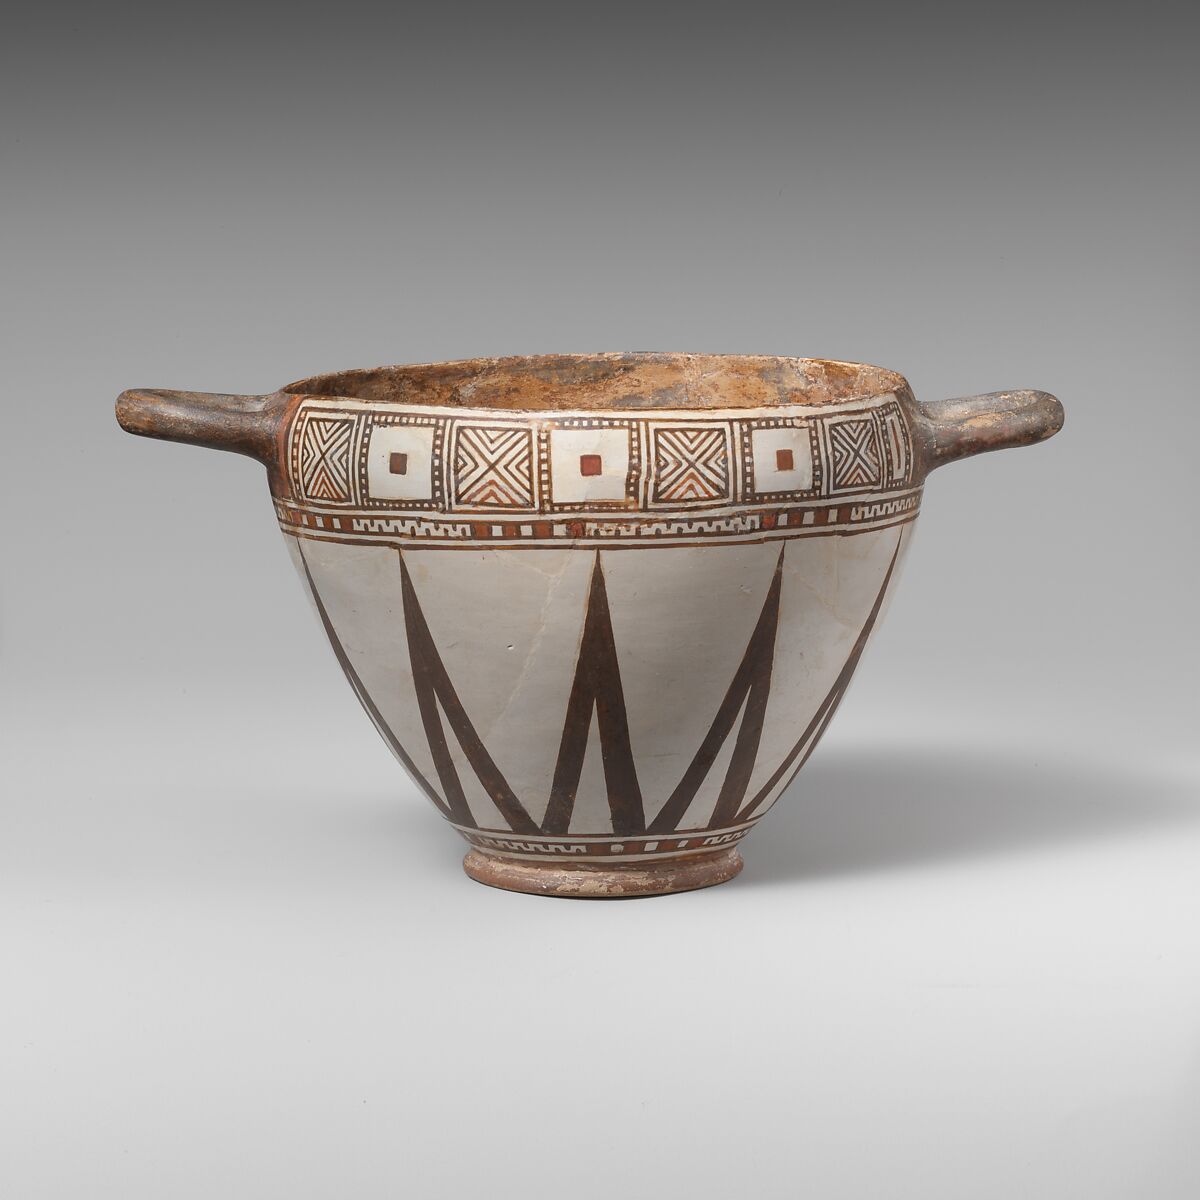 Terracotta skyphos (drinking cup)